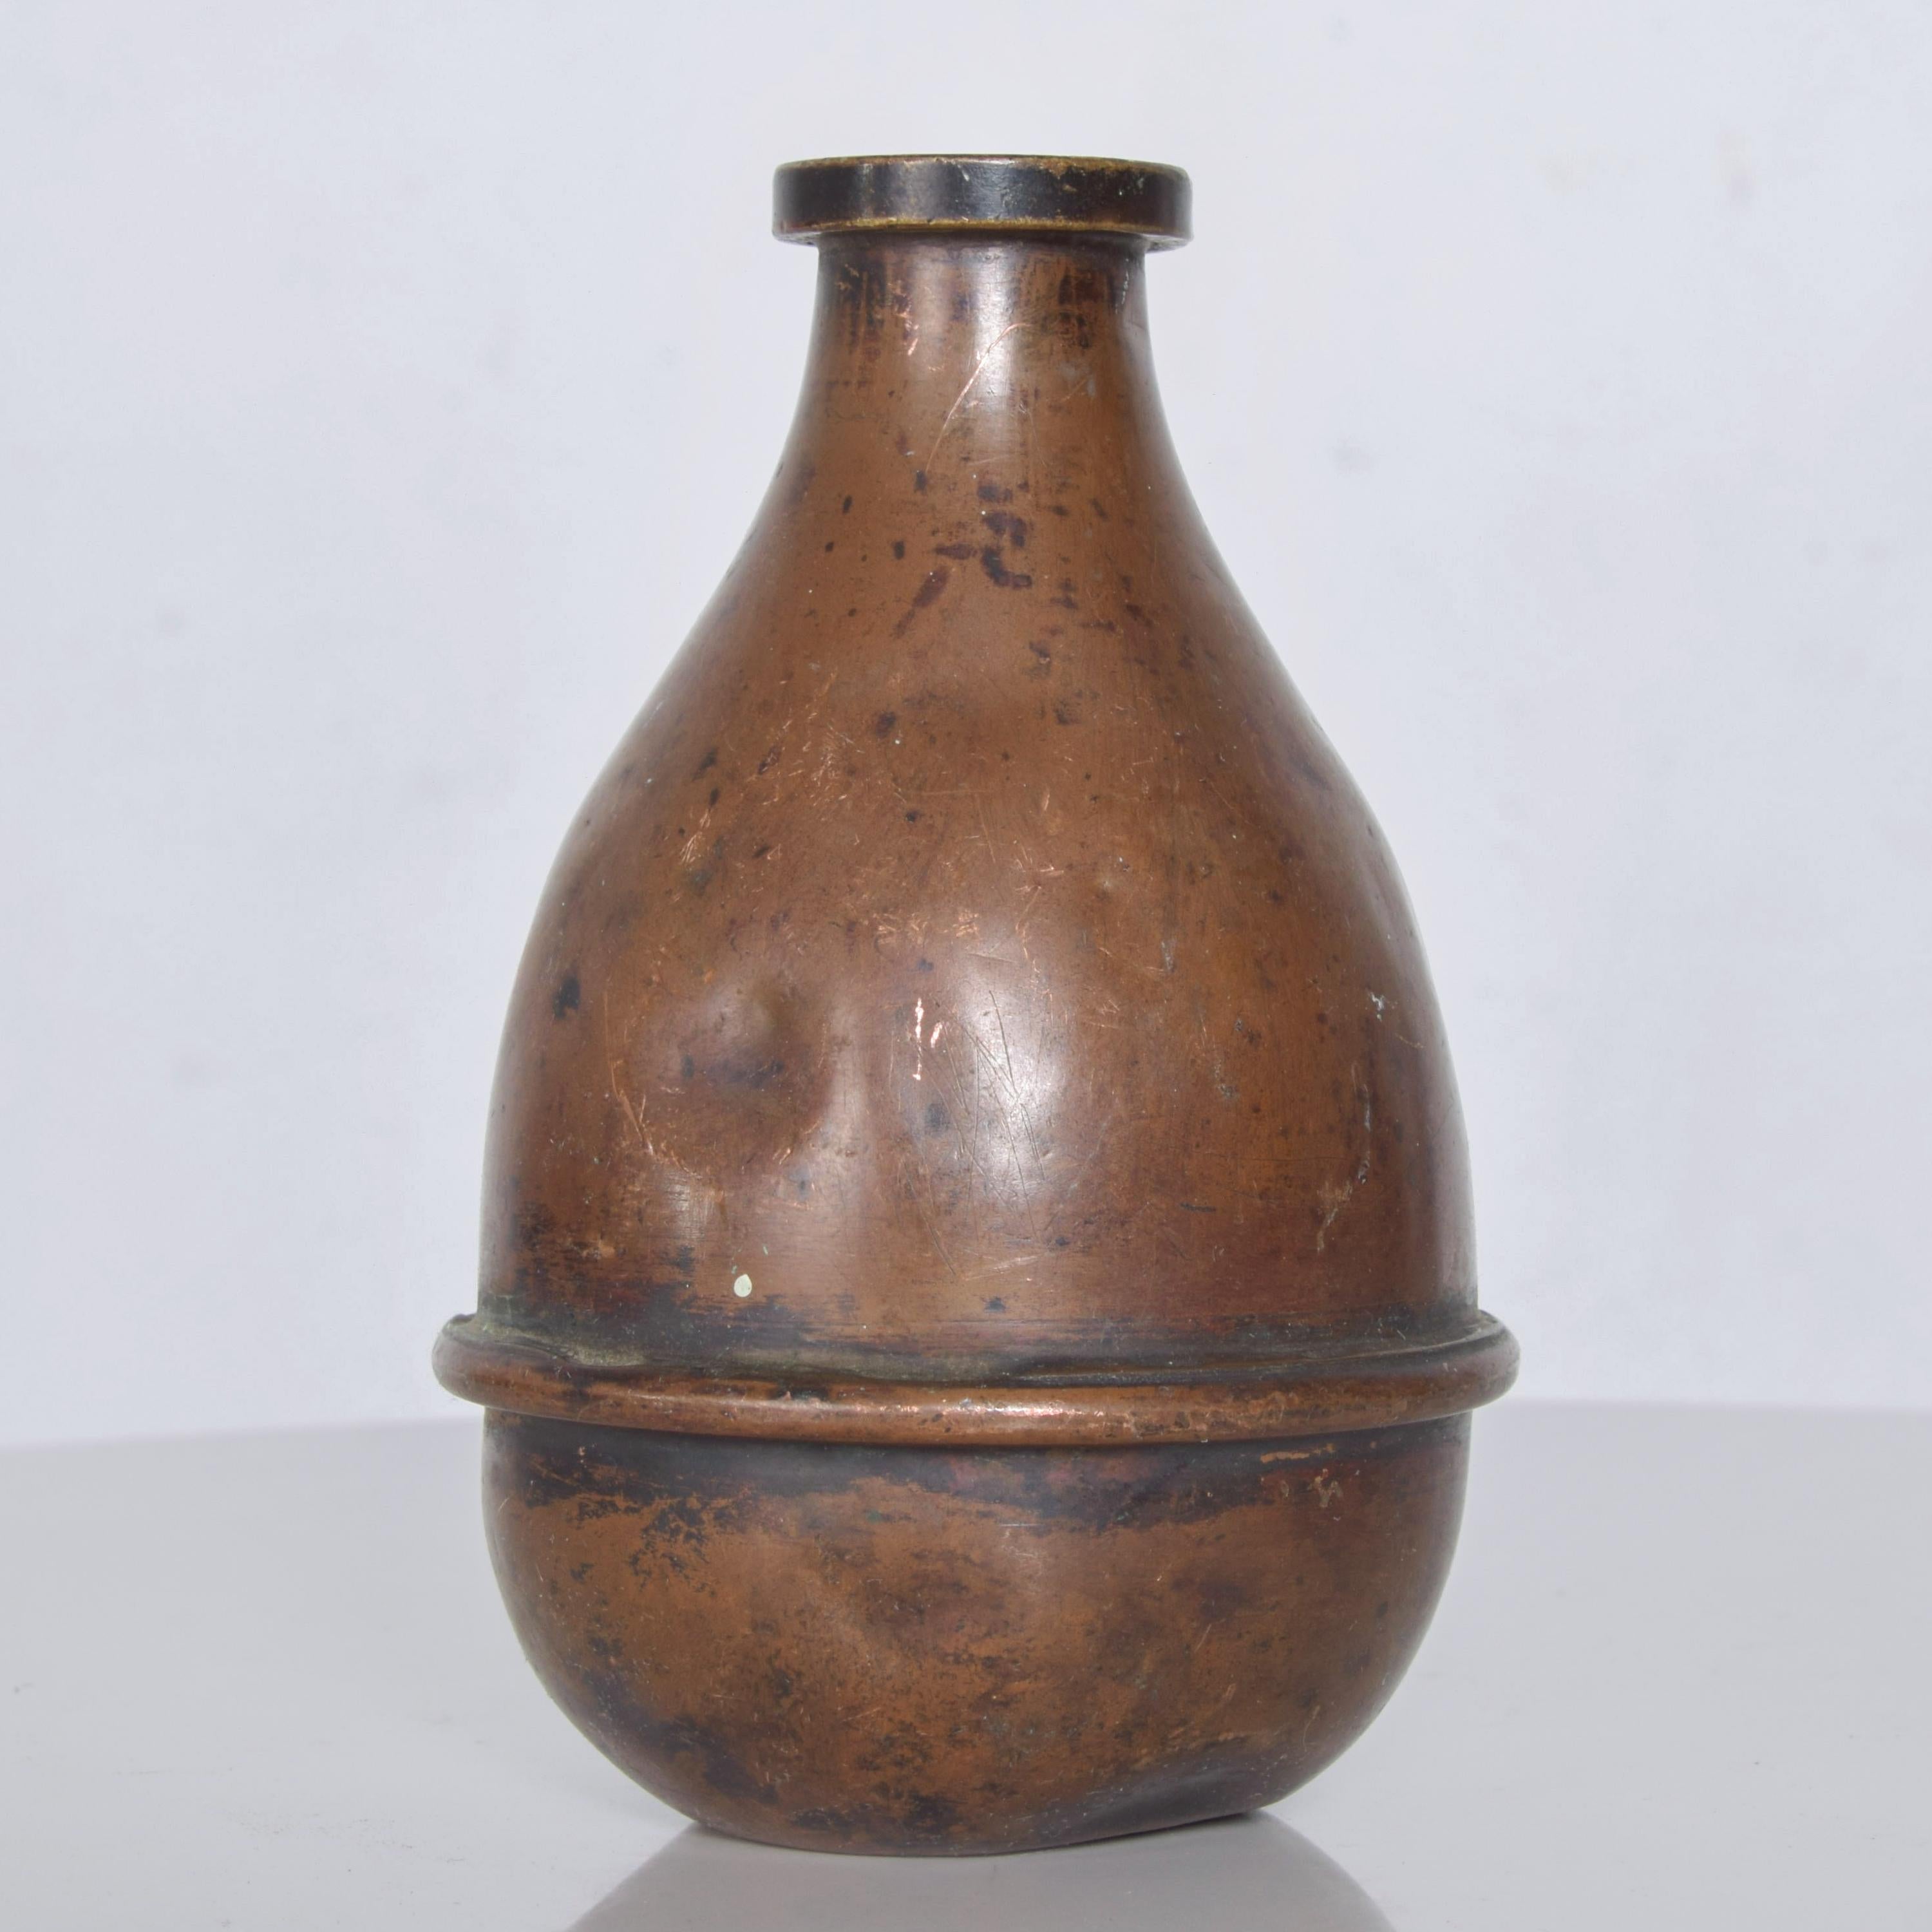 Vintage Industrial patinated copper aged bottle jug vase, USA, 1940s
Original unrestored vintage presentation. Vintage patina condition. Nicks dents and scuffs present.
No signature or label present. 
Dimensions: 5.5